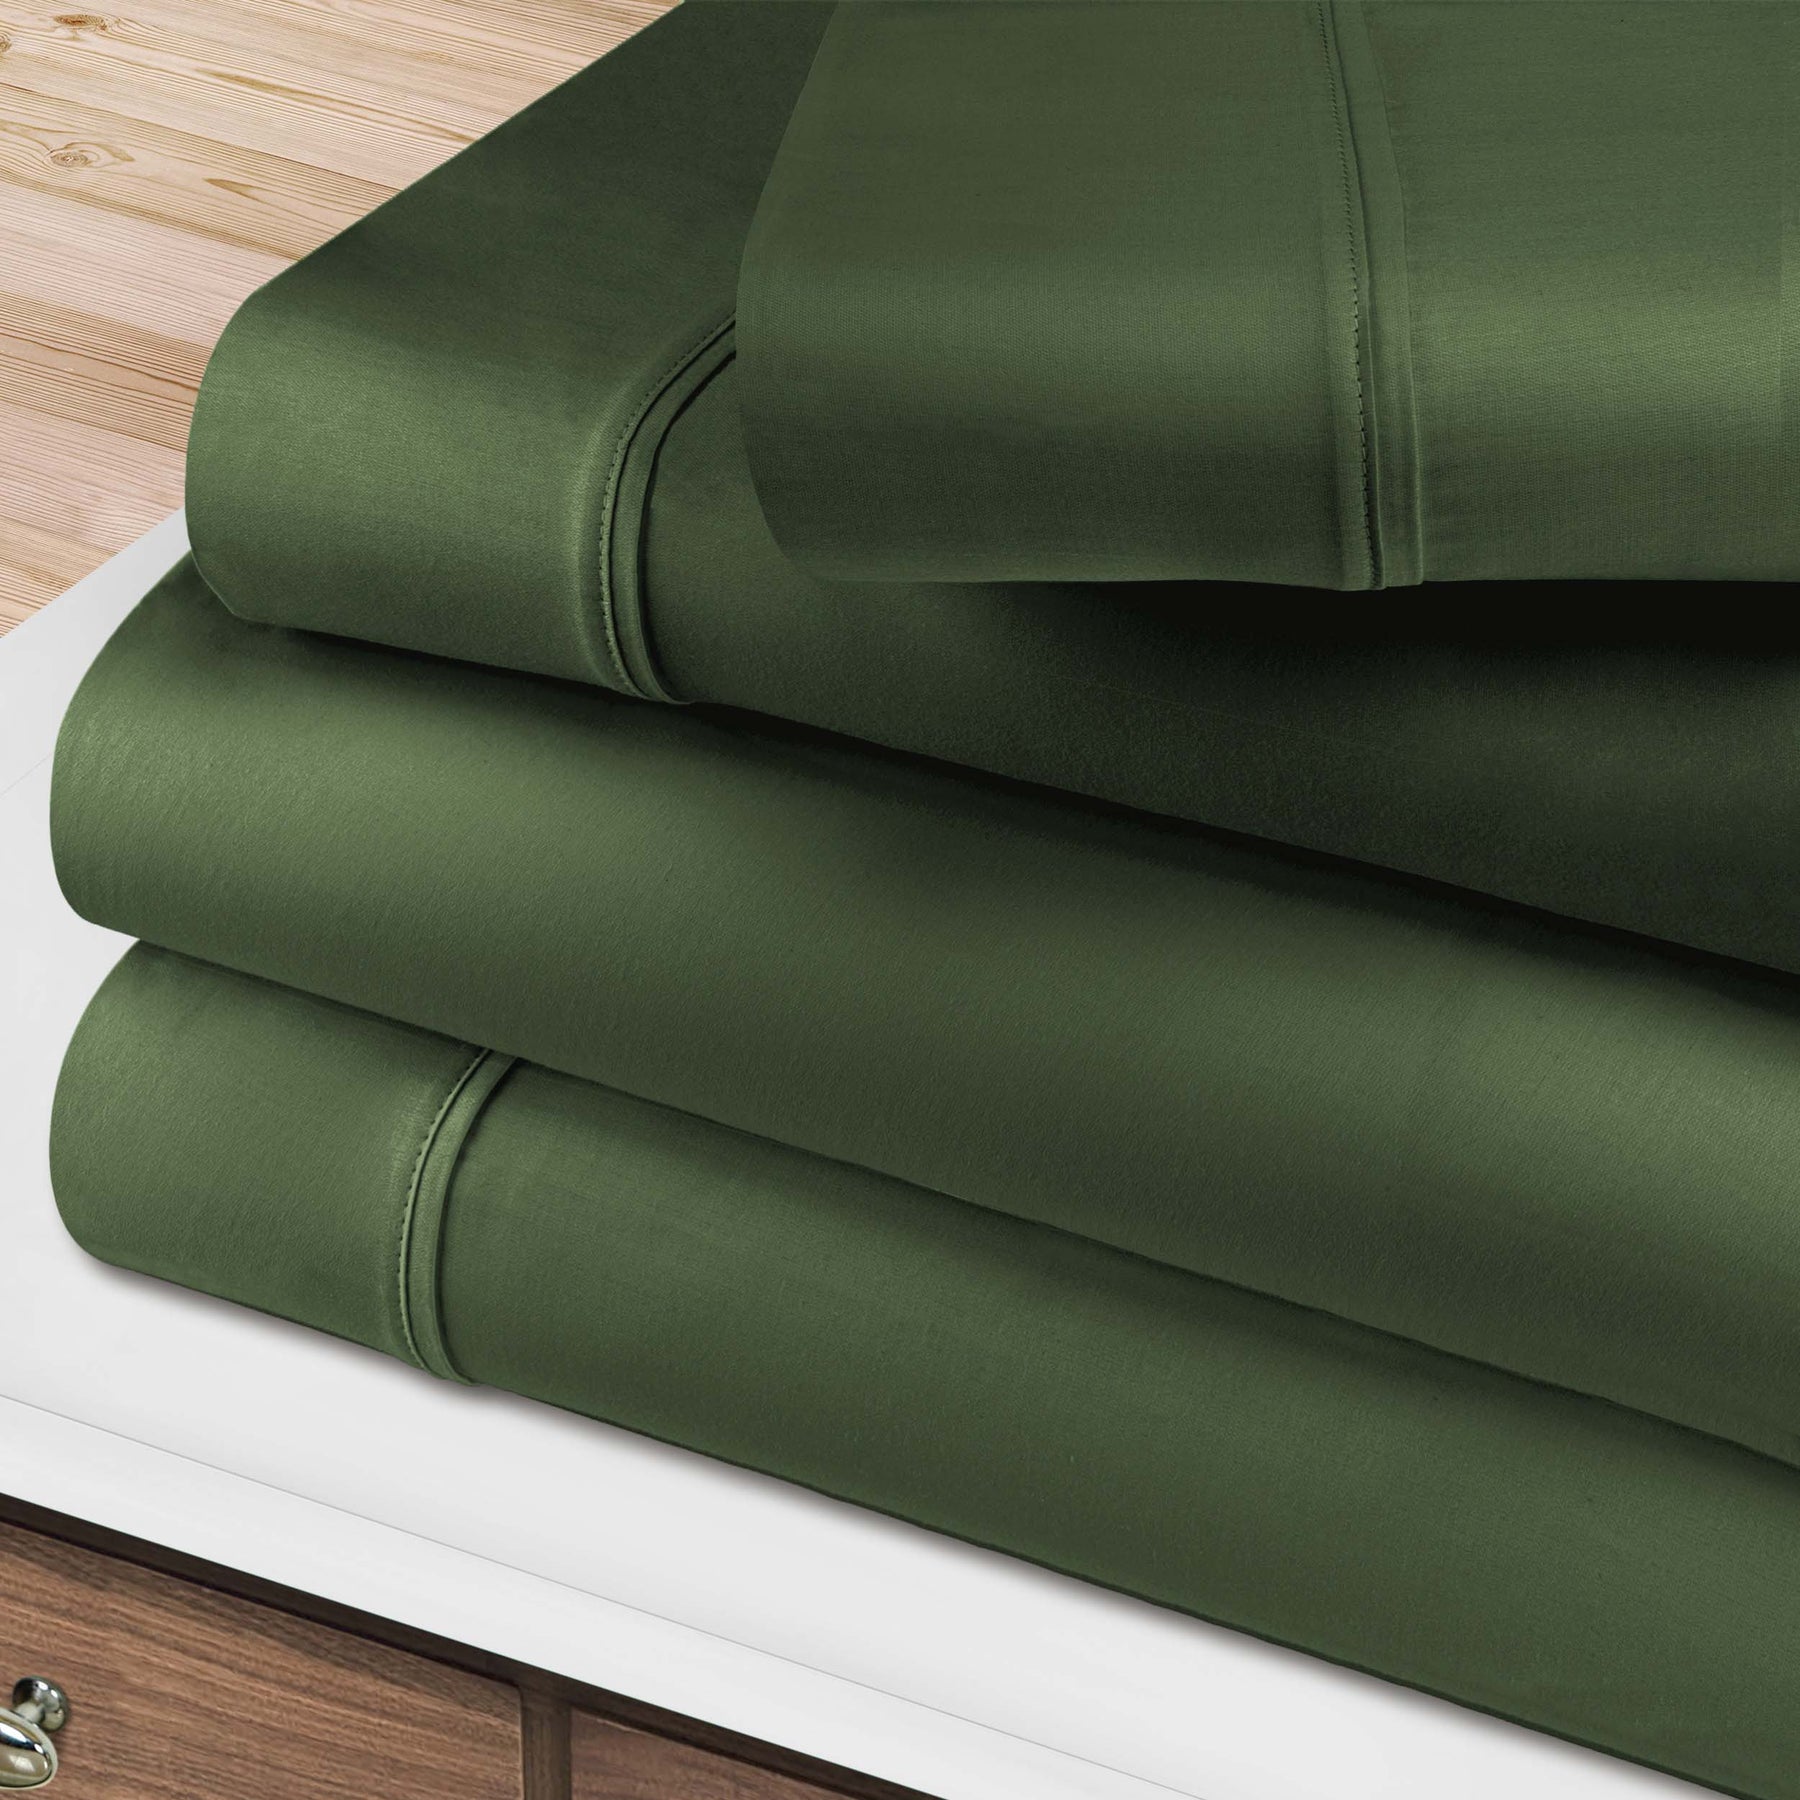 400 Thread Count Egyptian Cotton Solid Deep Pocket Sheet Set - Hunter Green